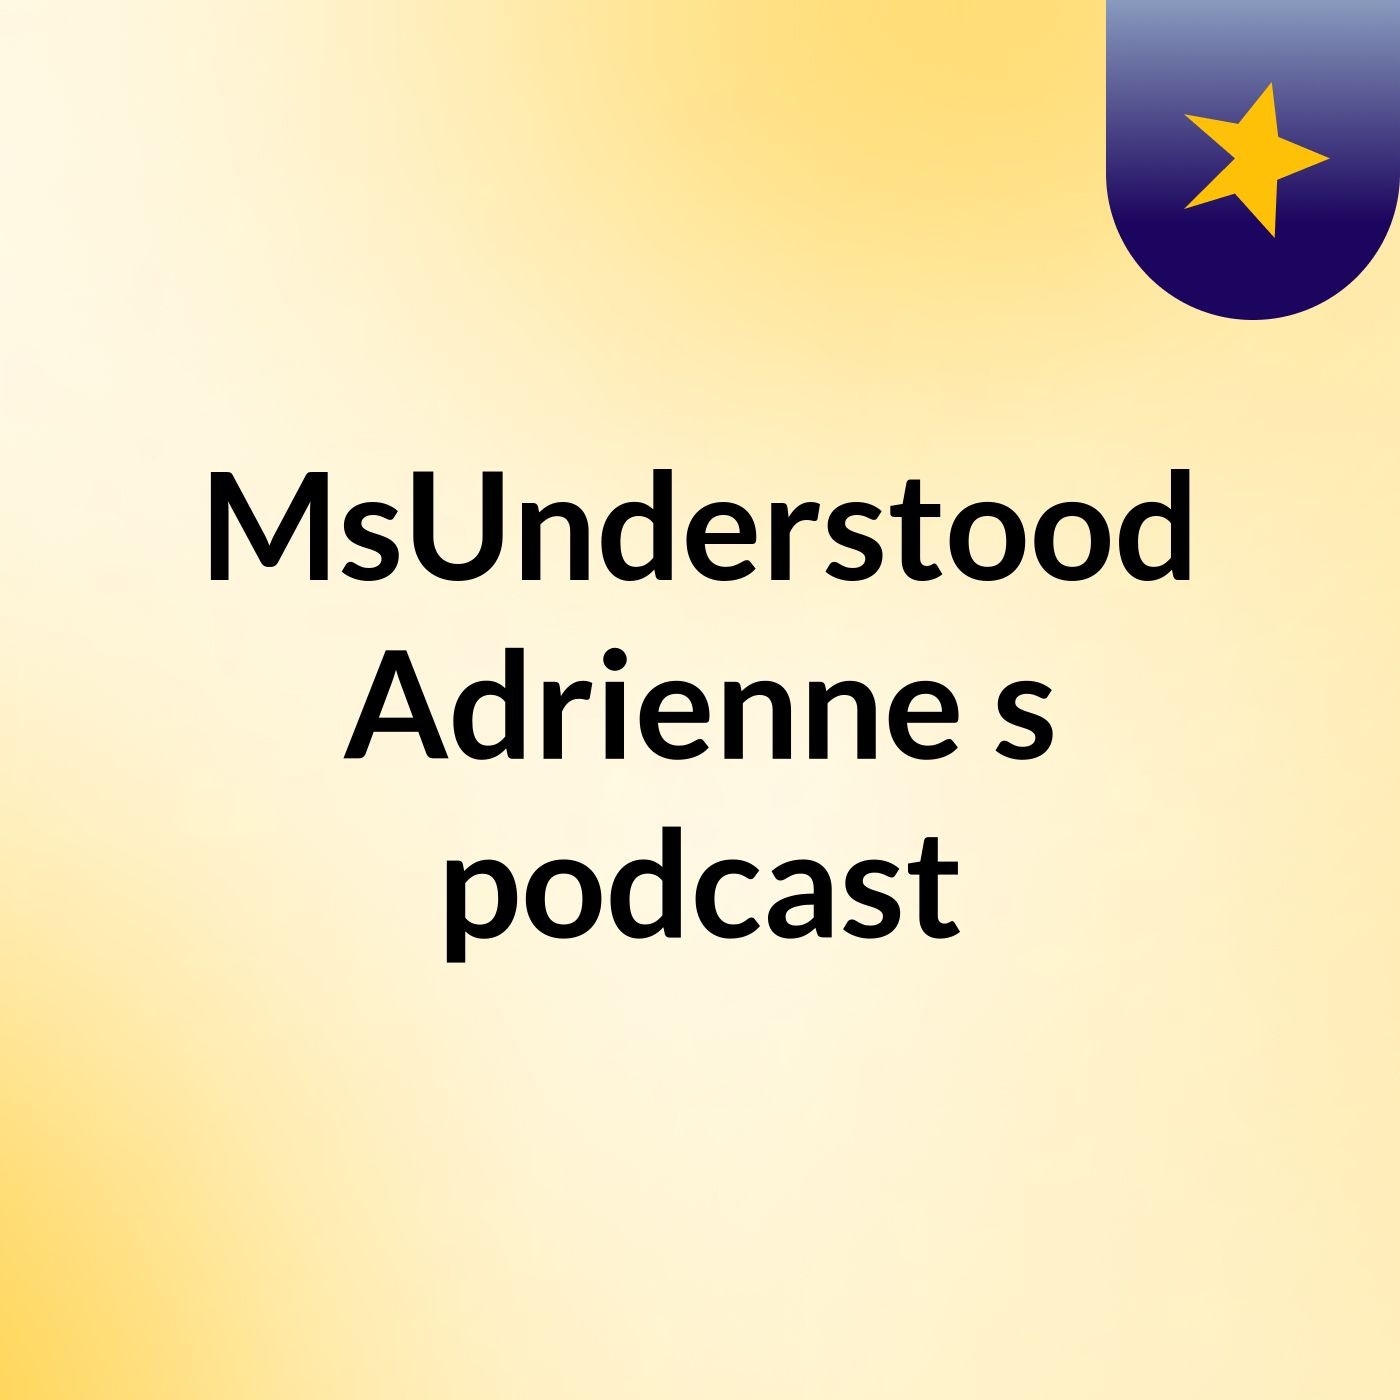 Episode 5 - MsUnderstood Adrienne's podcast